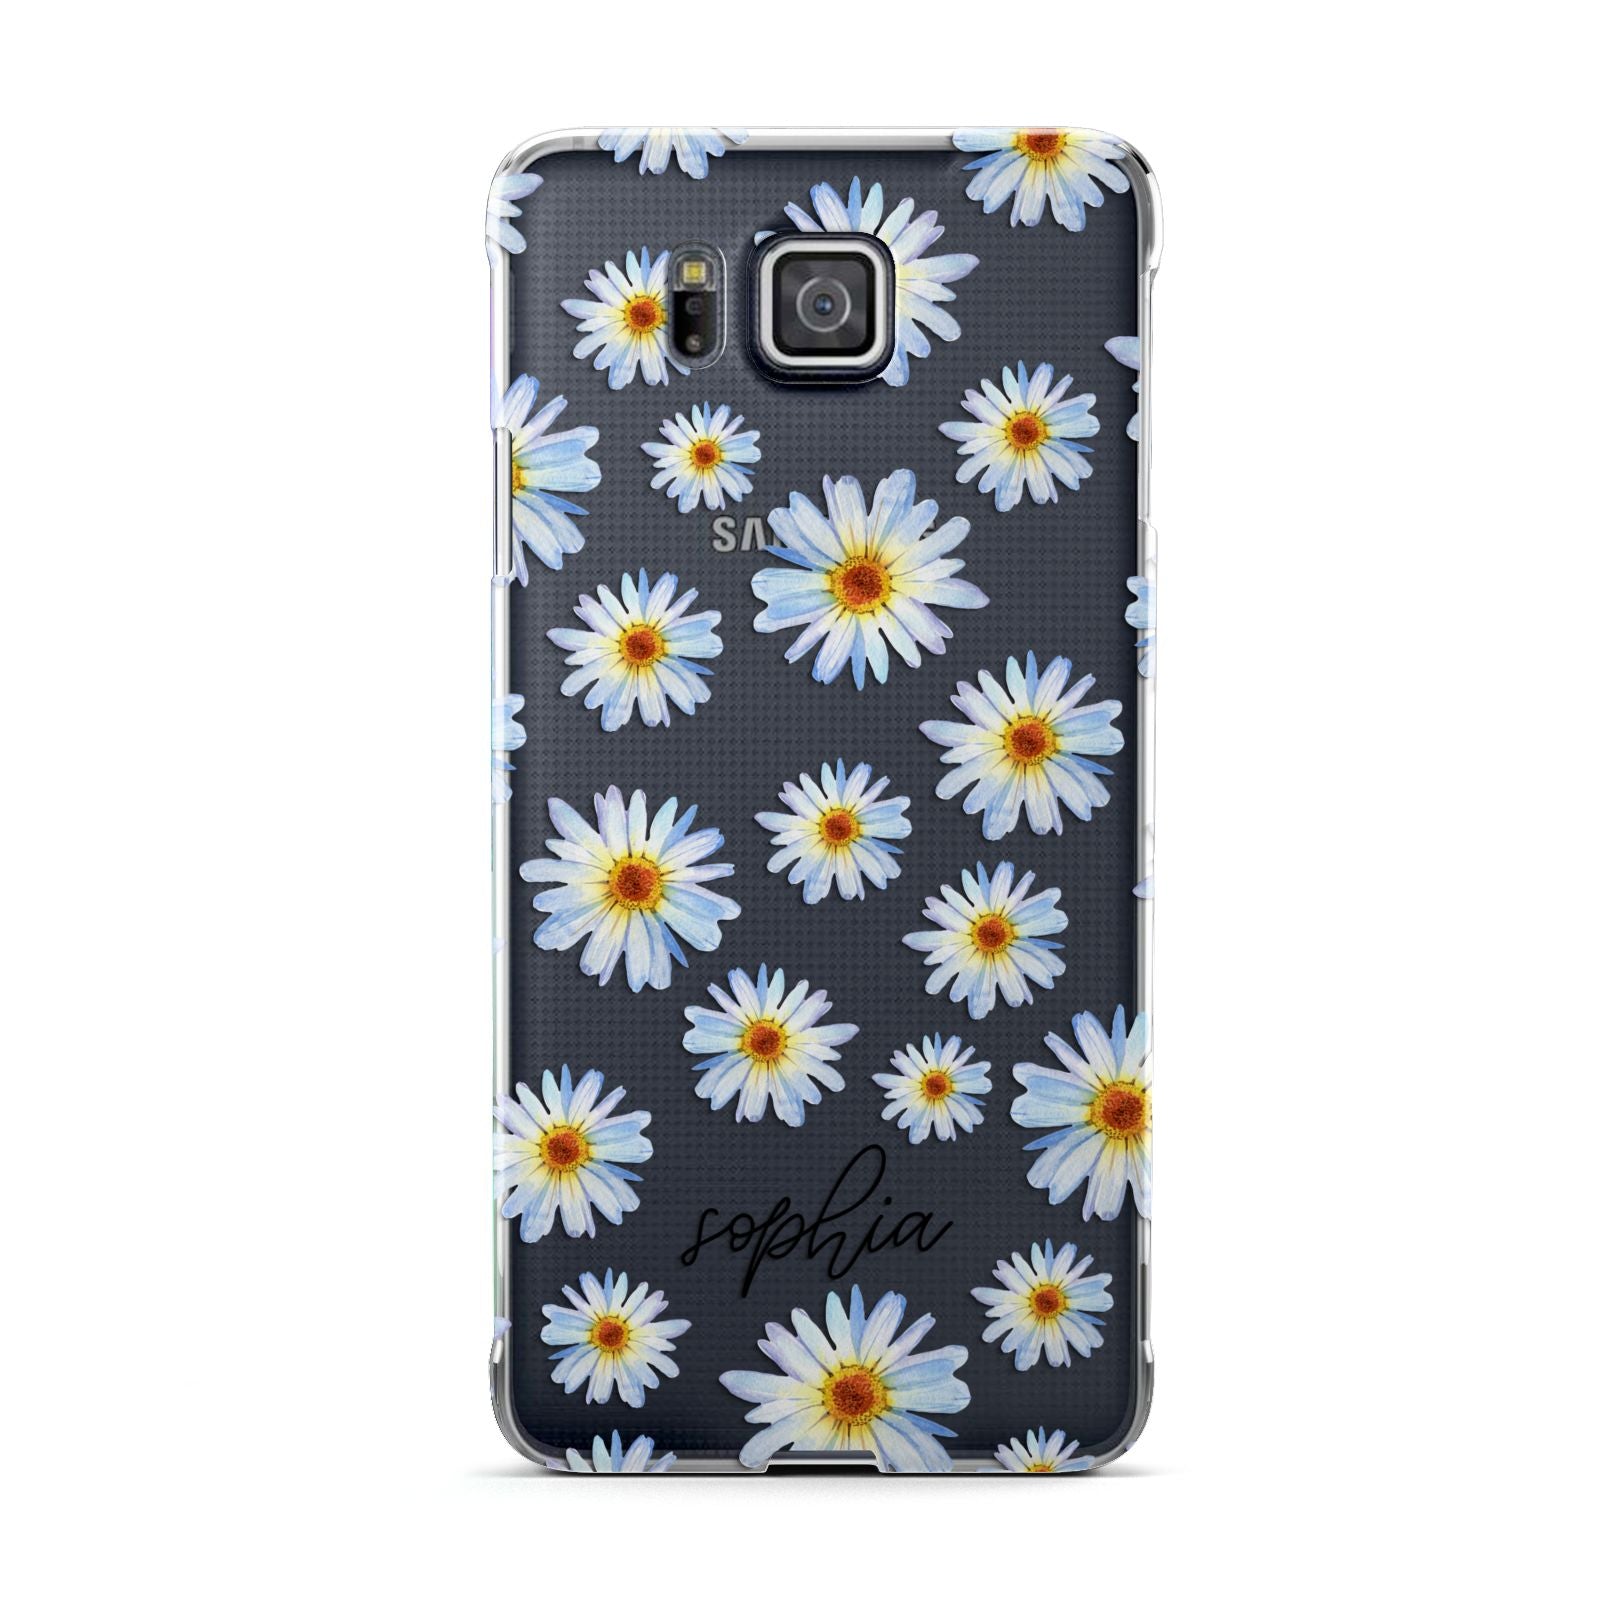 Personalised Daisy Samsung Galaxy Alpha Case